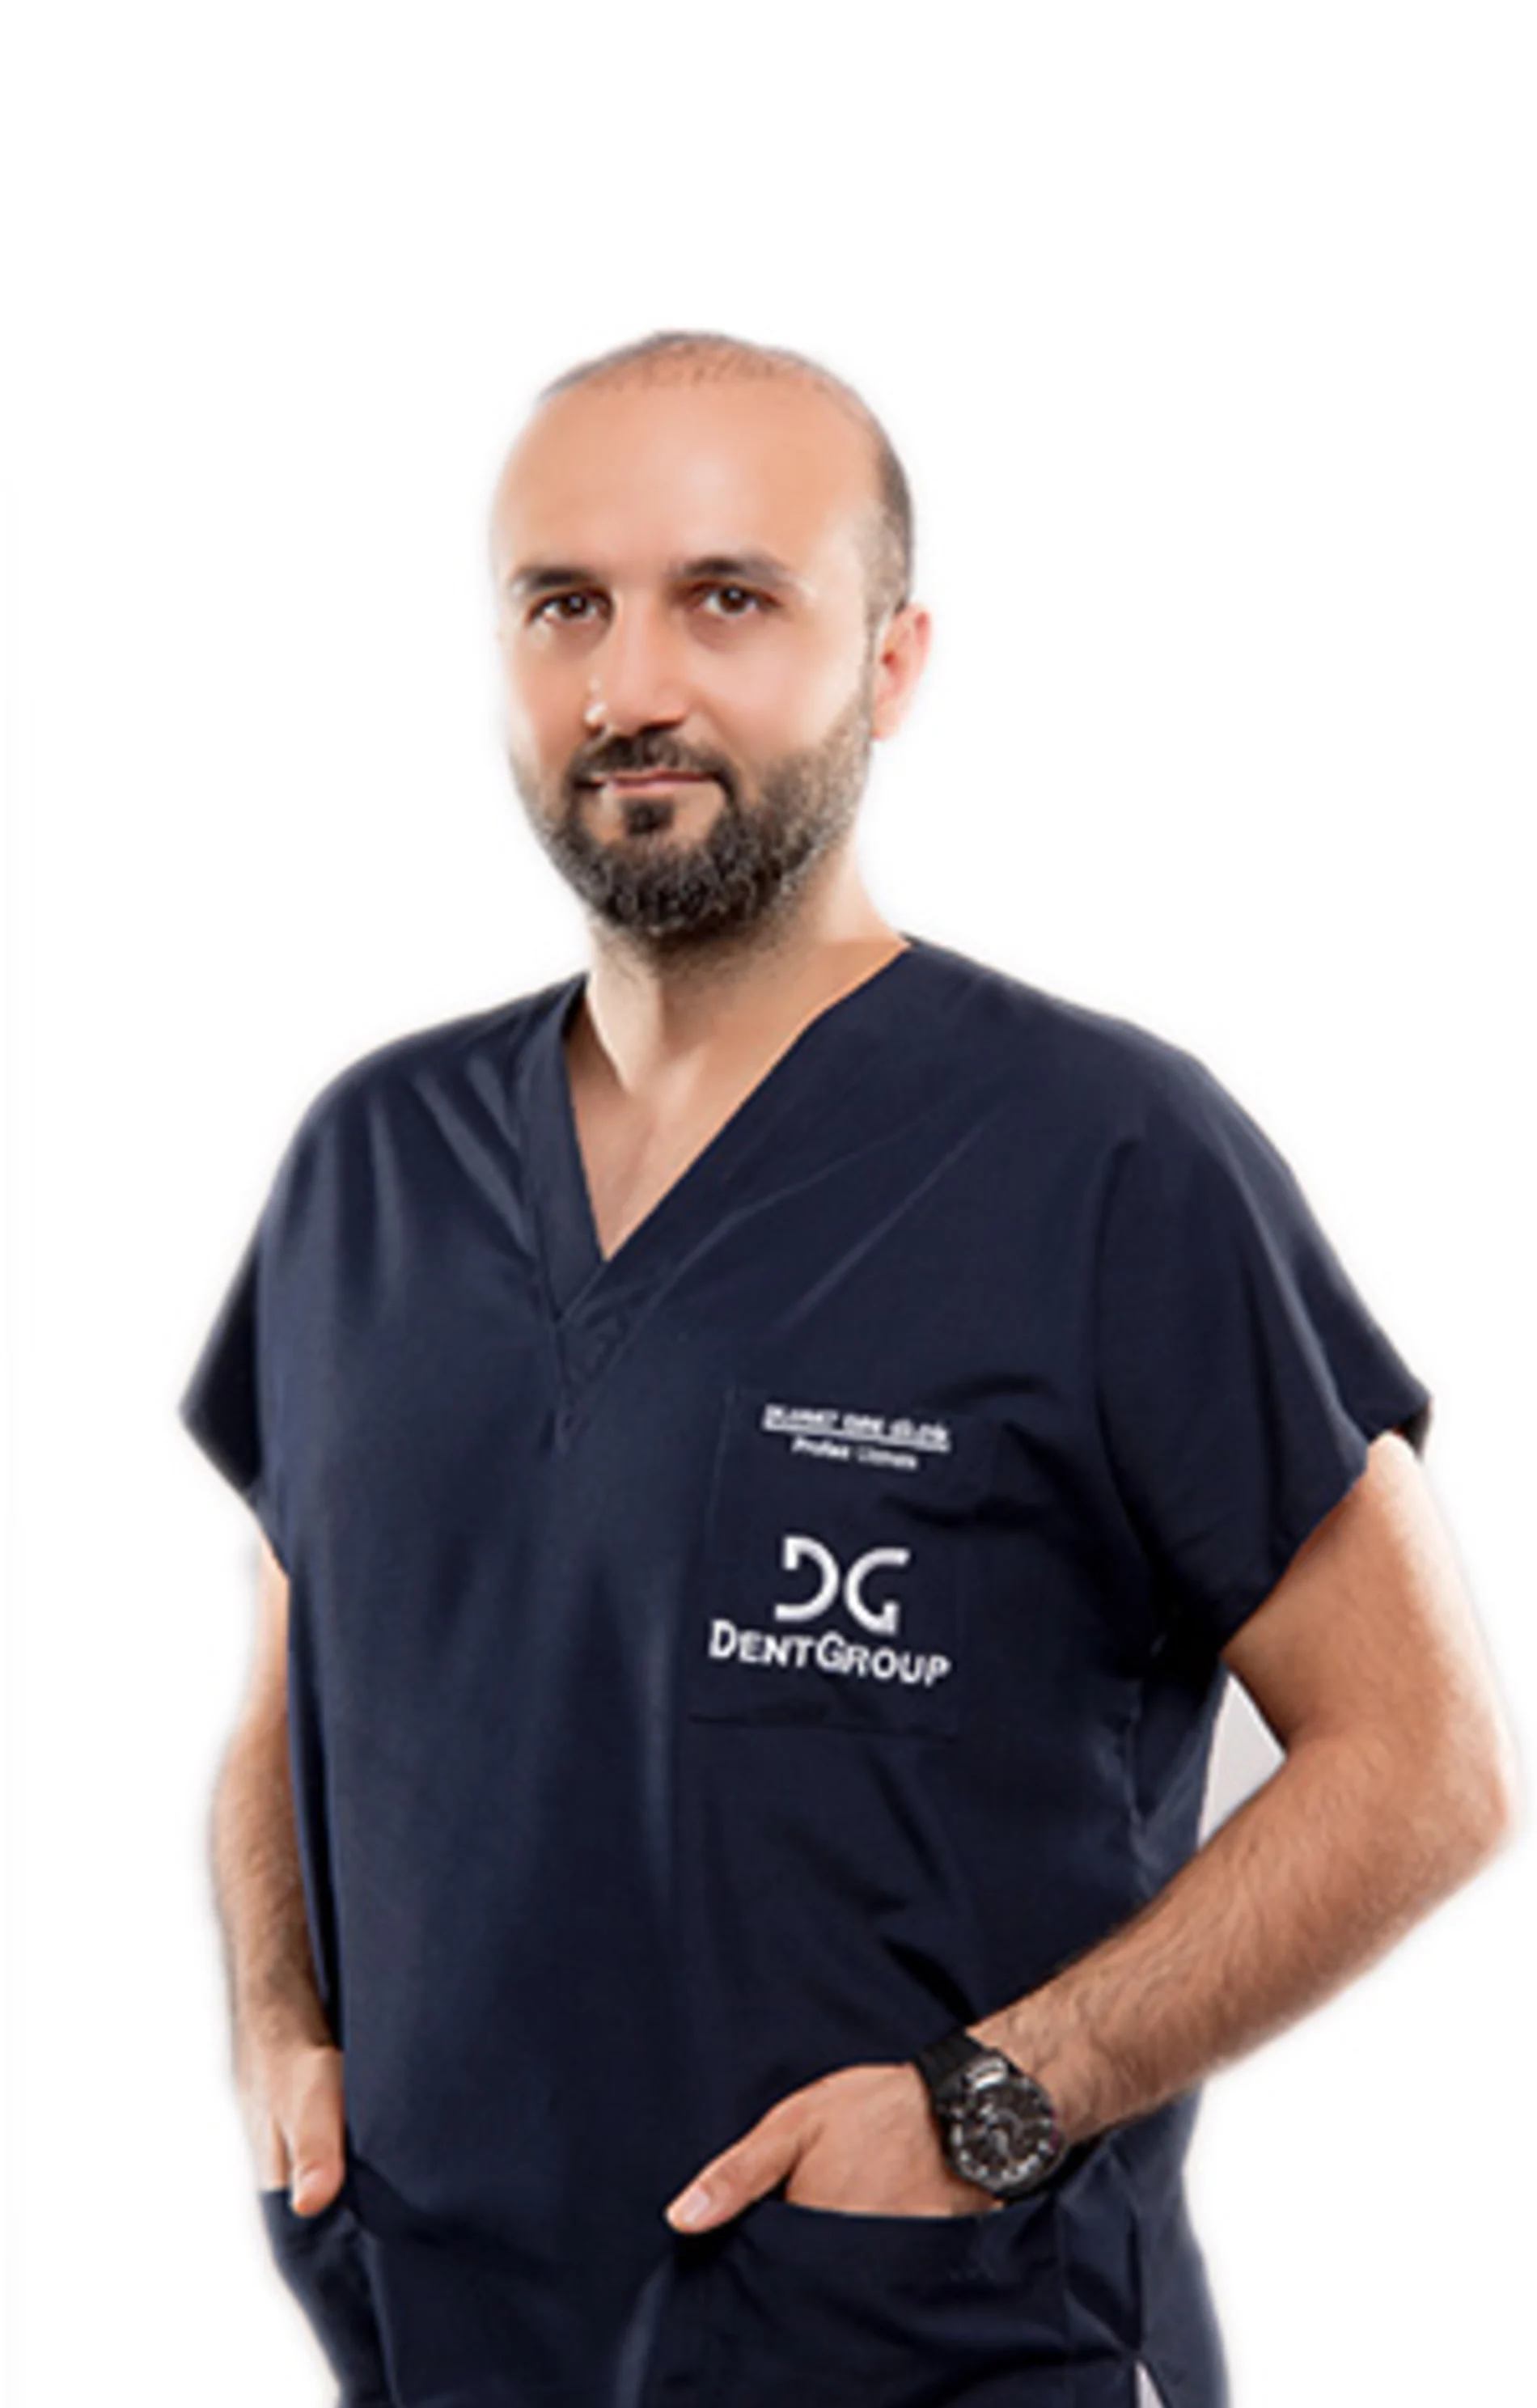 Immagine profilo del Dott. Ahmet Emre Gülerik